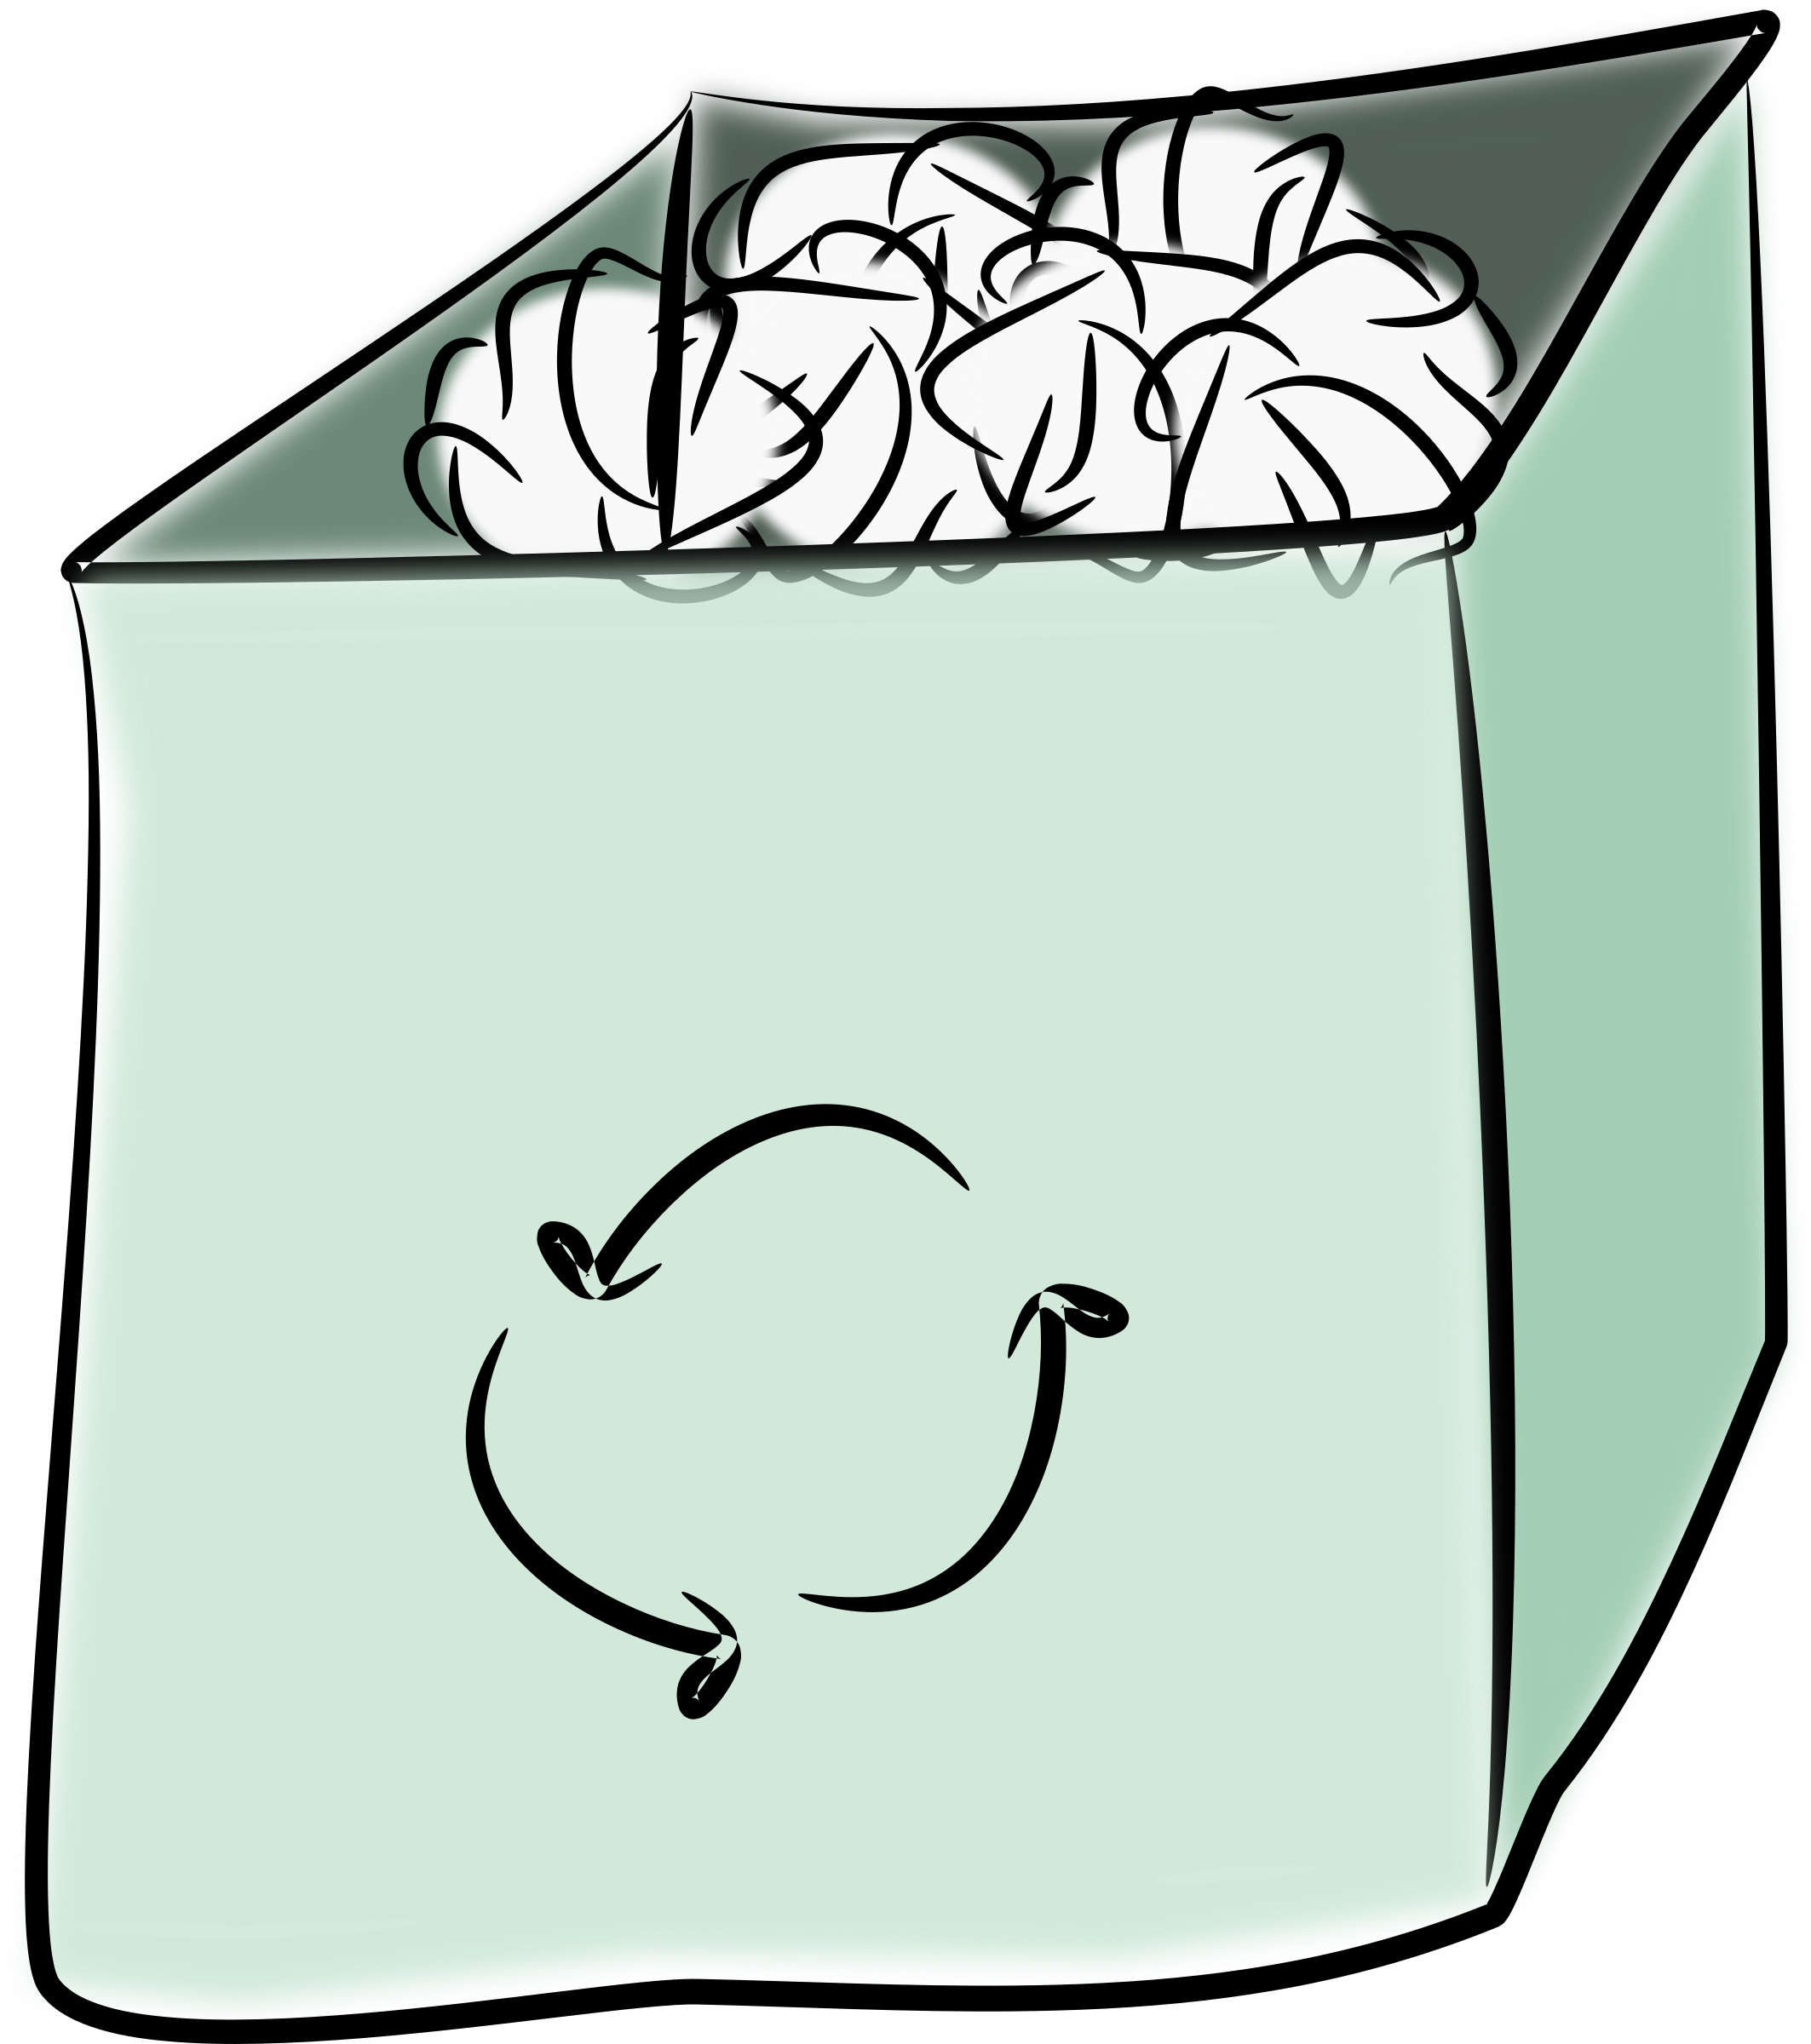 Trash bin big image. Clipart box sketch